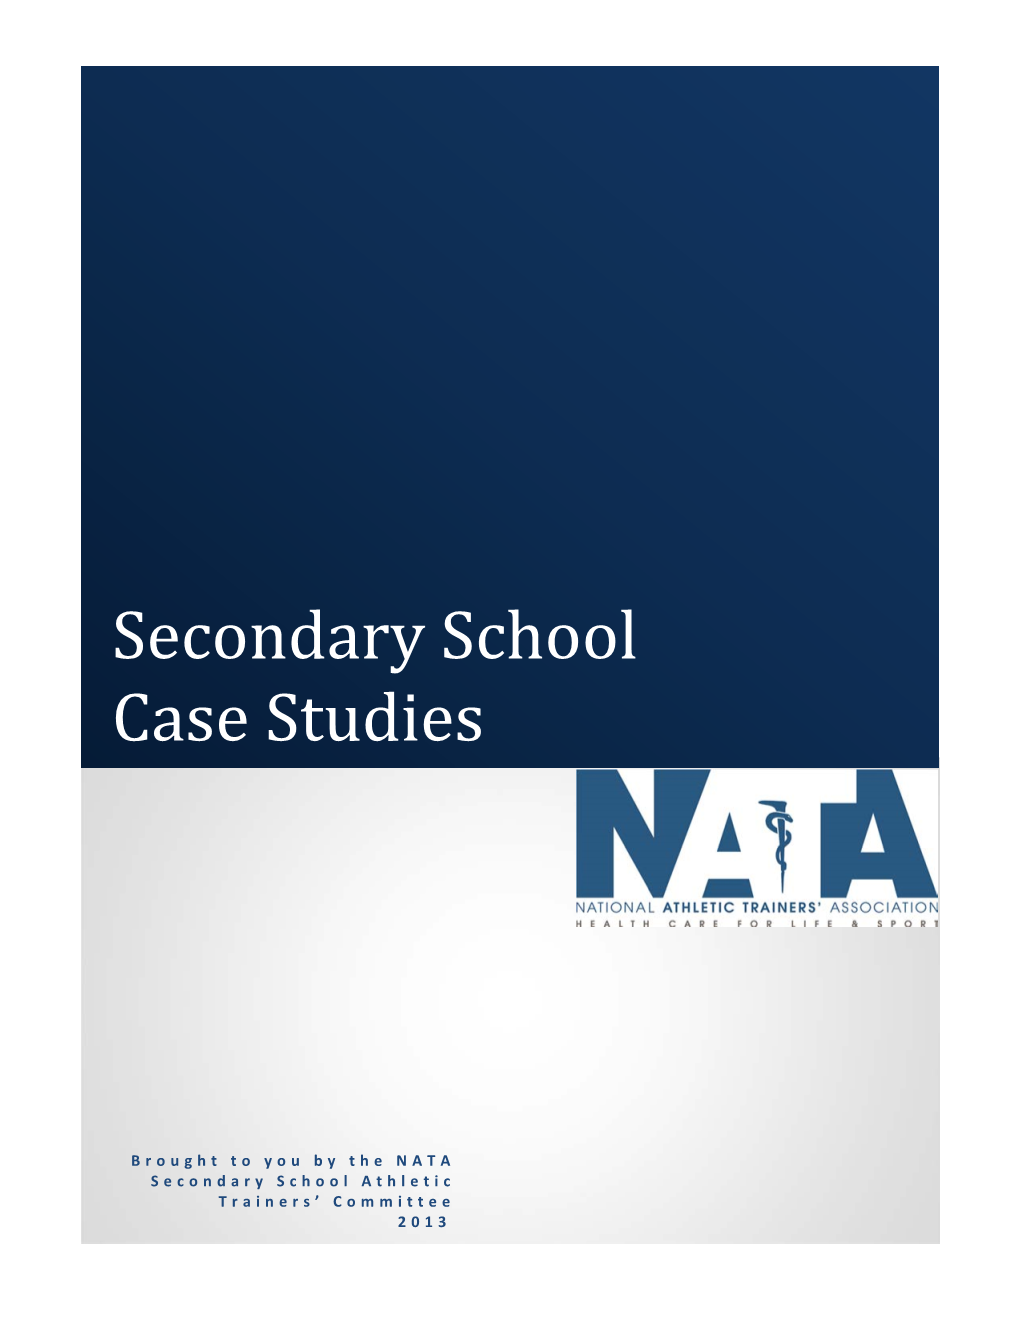 Secondary School Case Studies